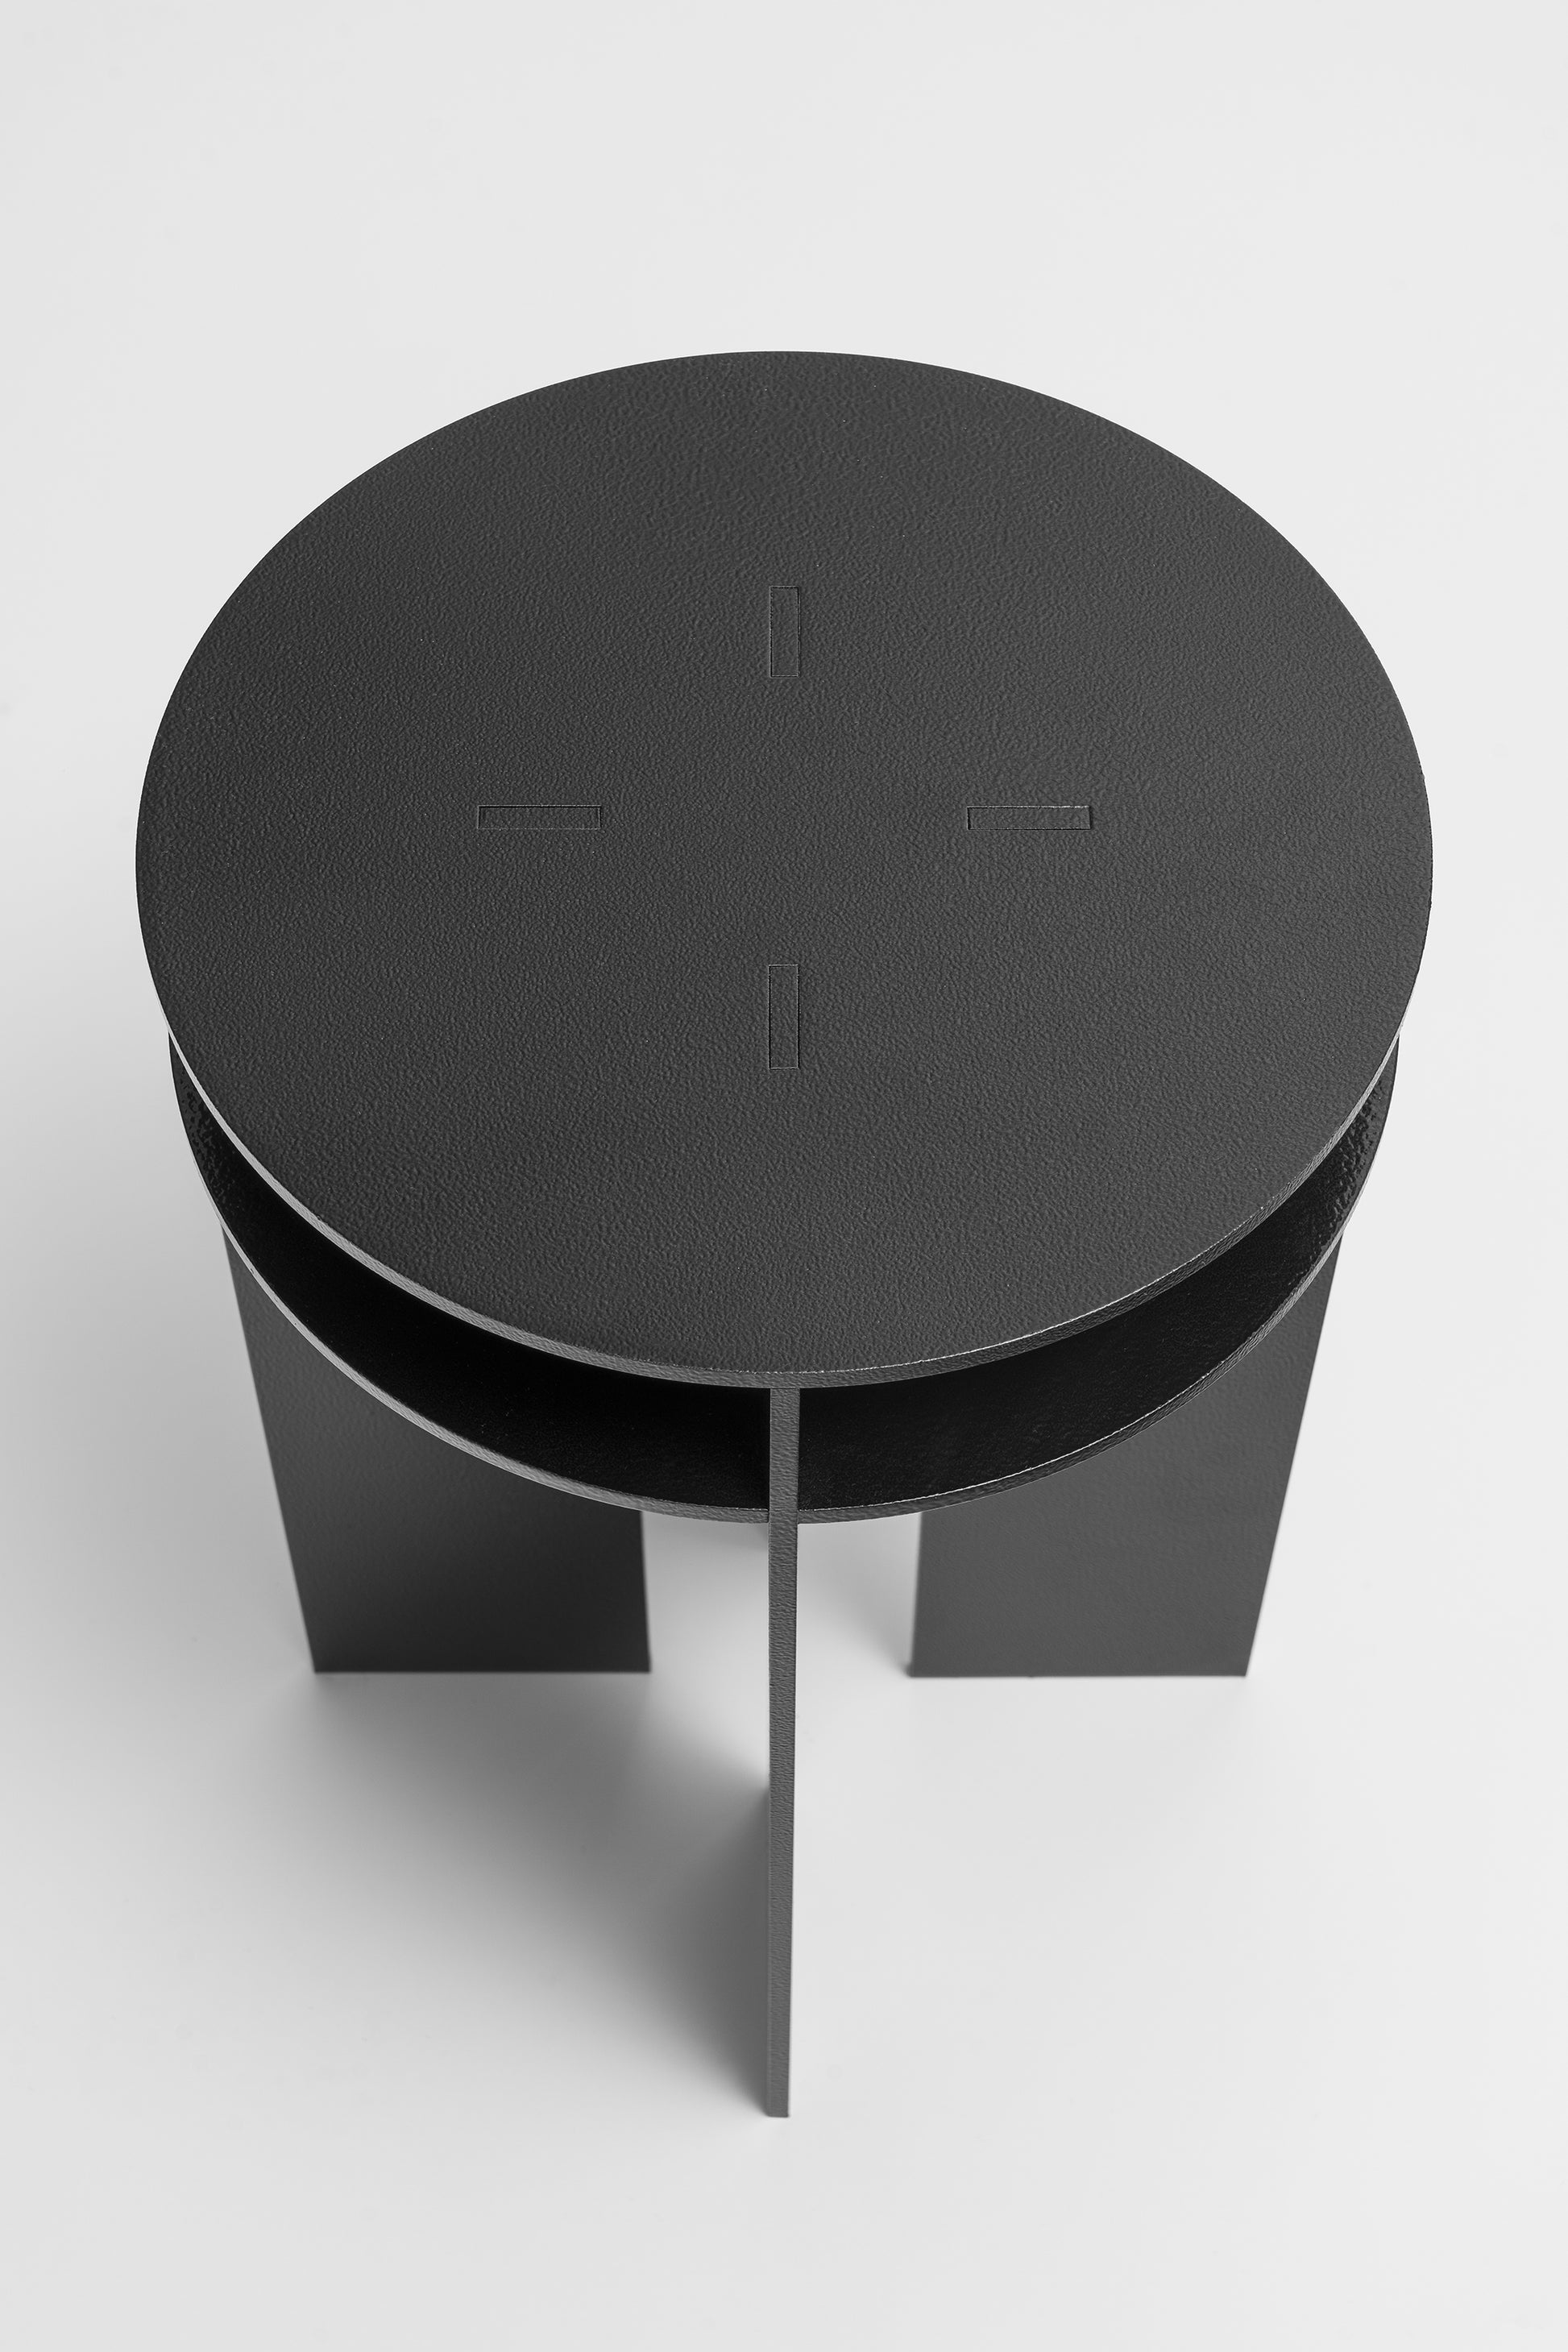 NM3-NM13 stool